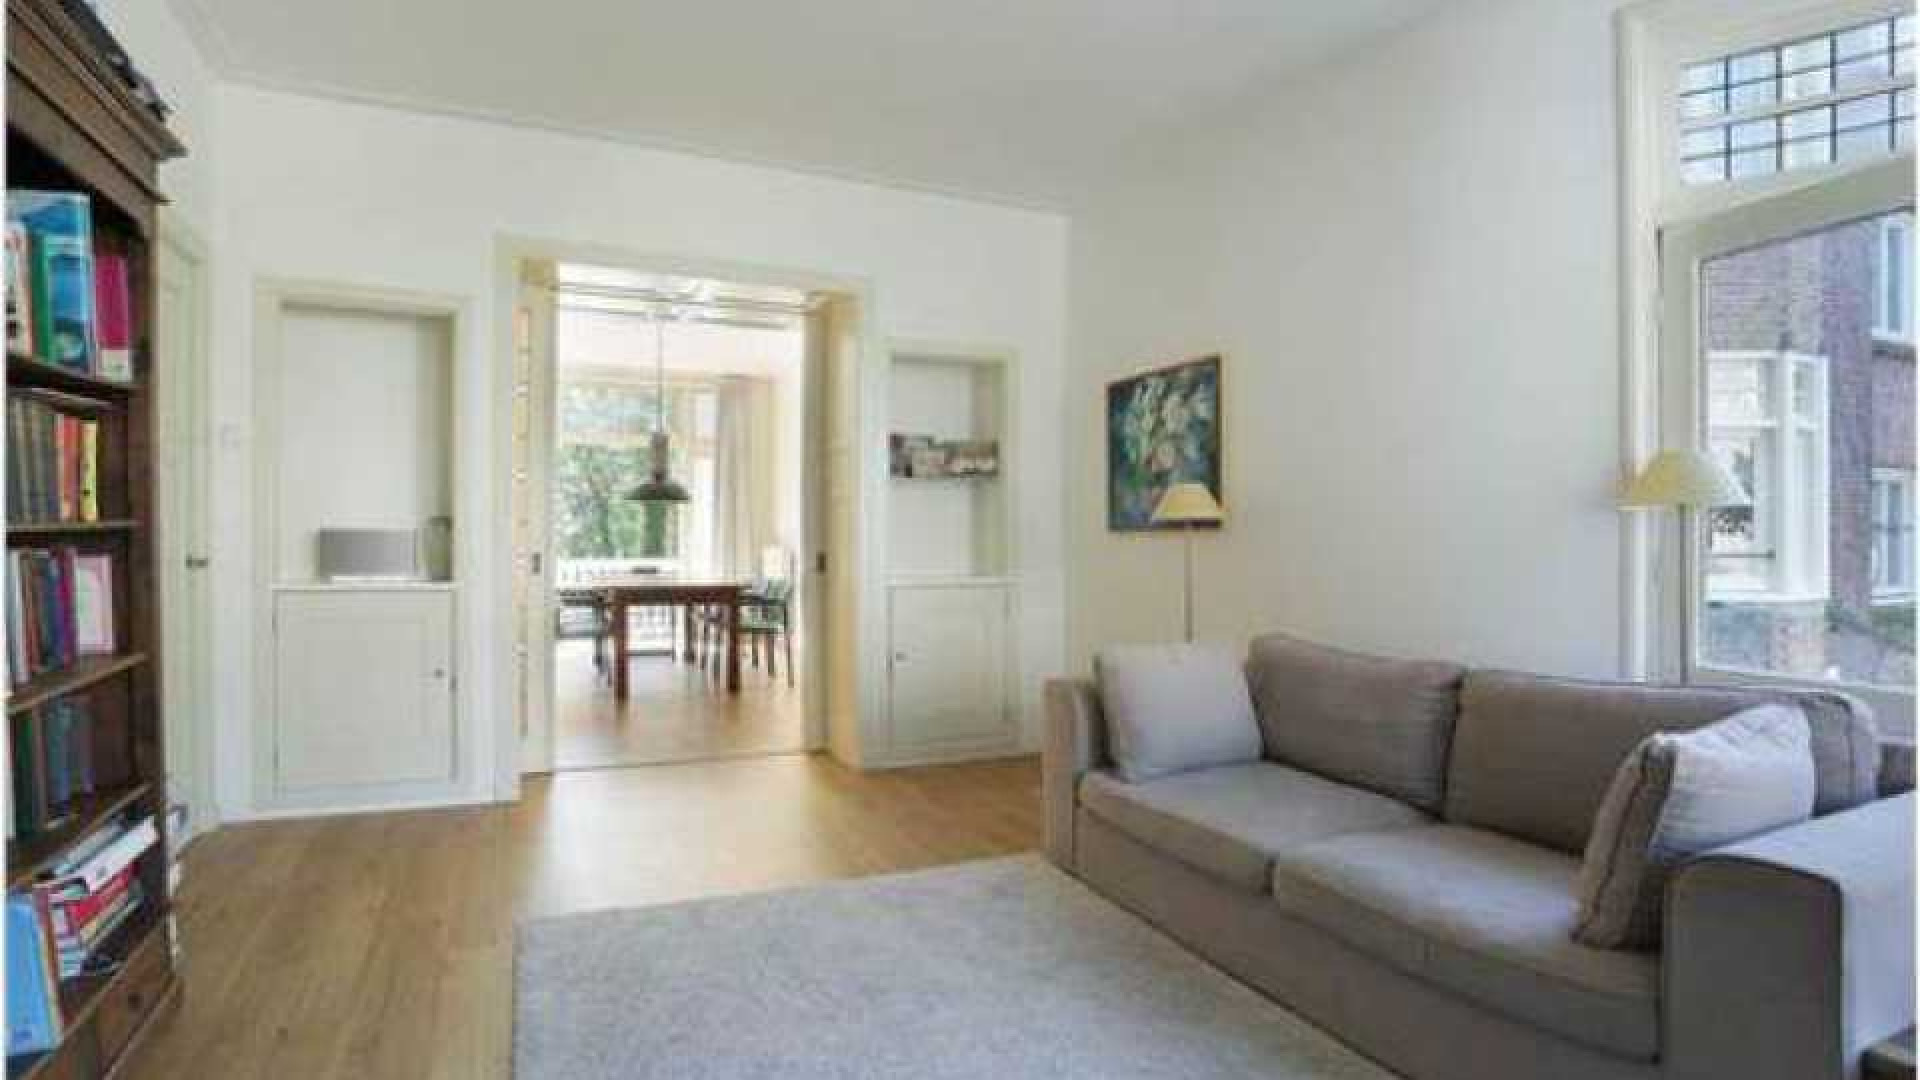 Dionne Stax koopt leuk appartement in Amsterdam. Zie foto's plus video! 8